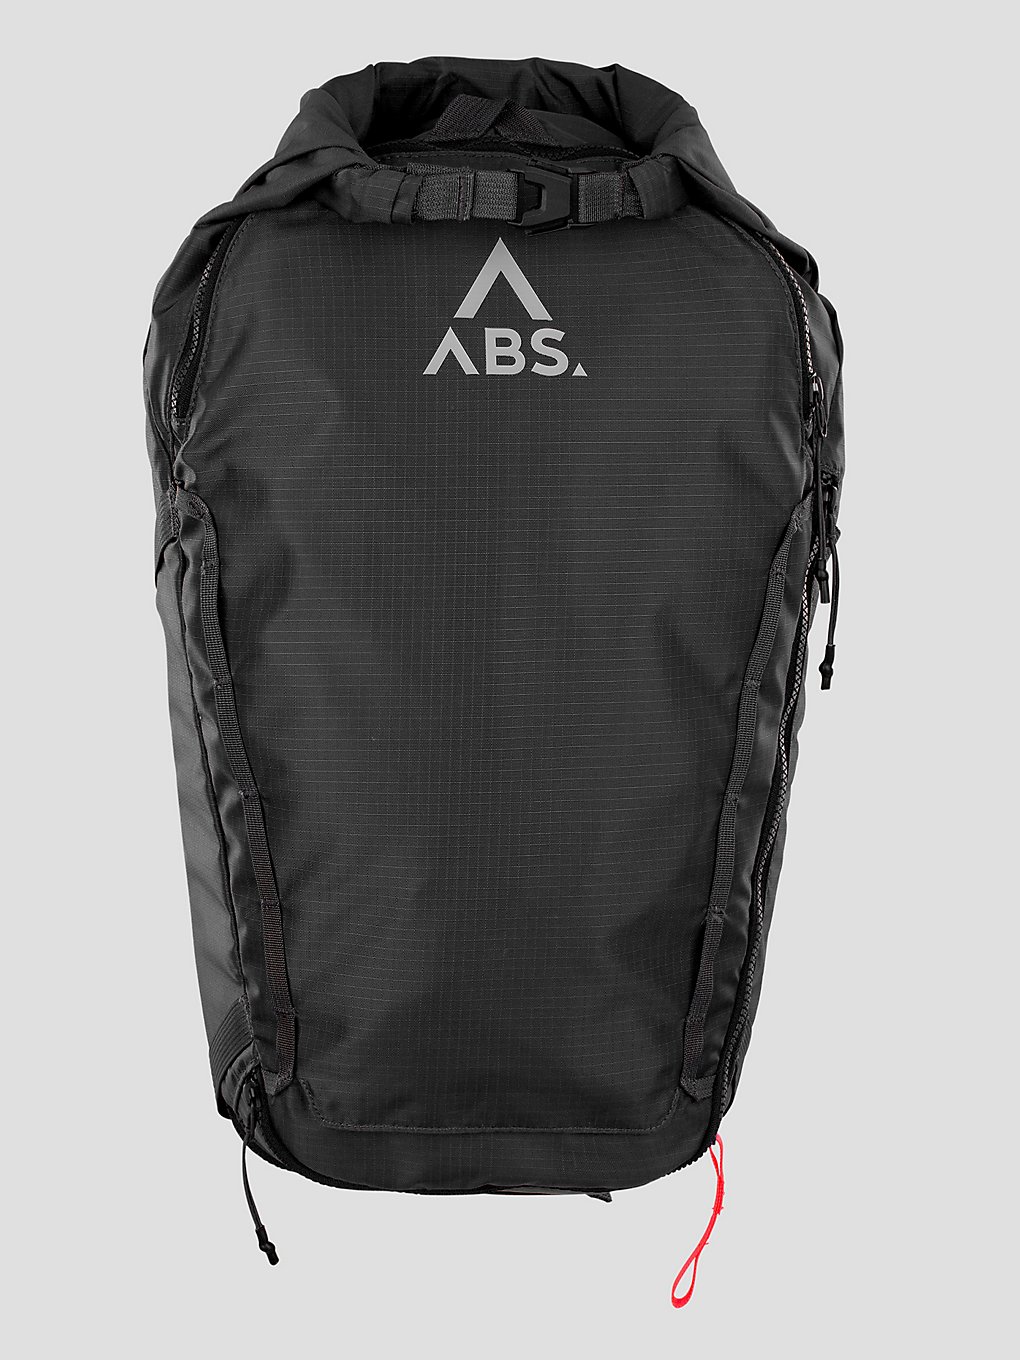 ABS A.Light Tour Zipon (25-30L) Rucksack dark slate kaufen